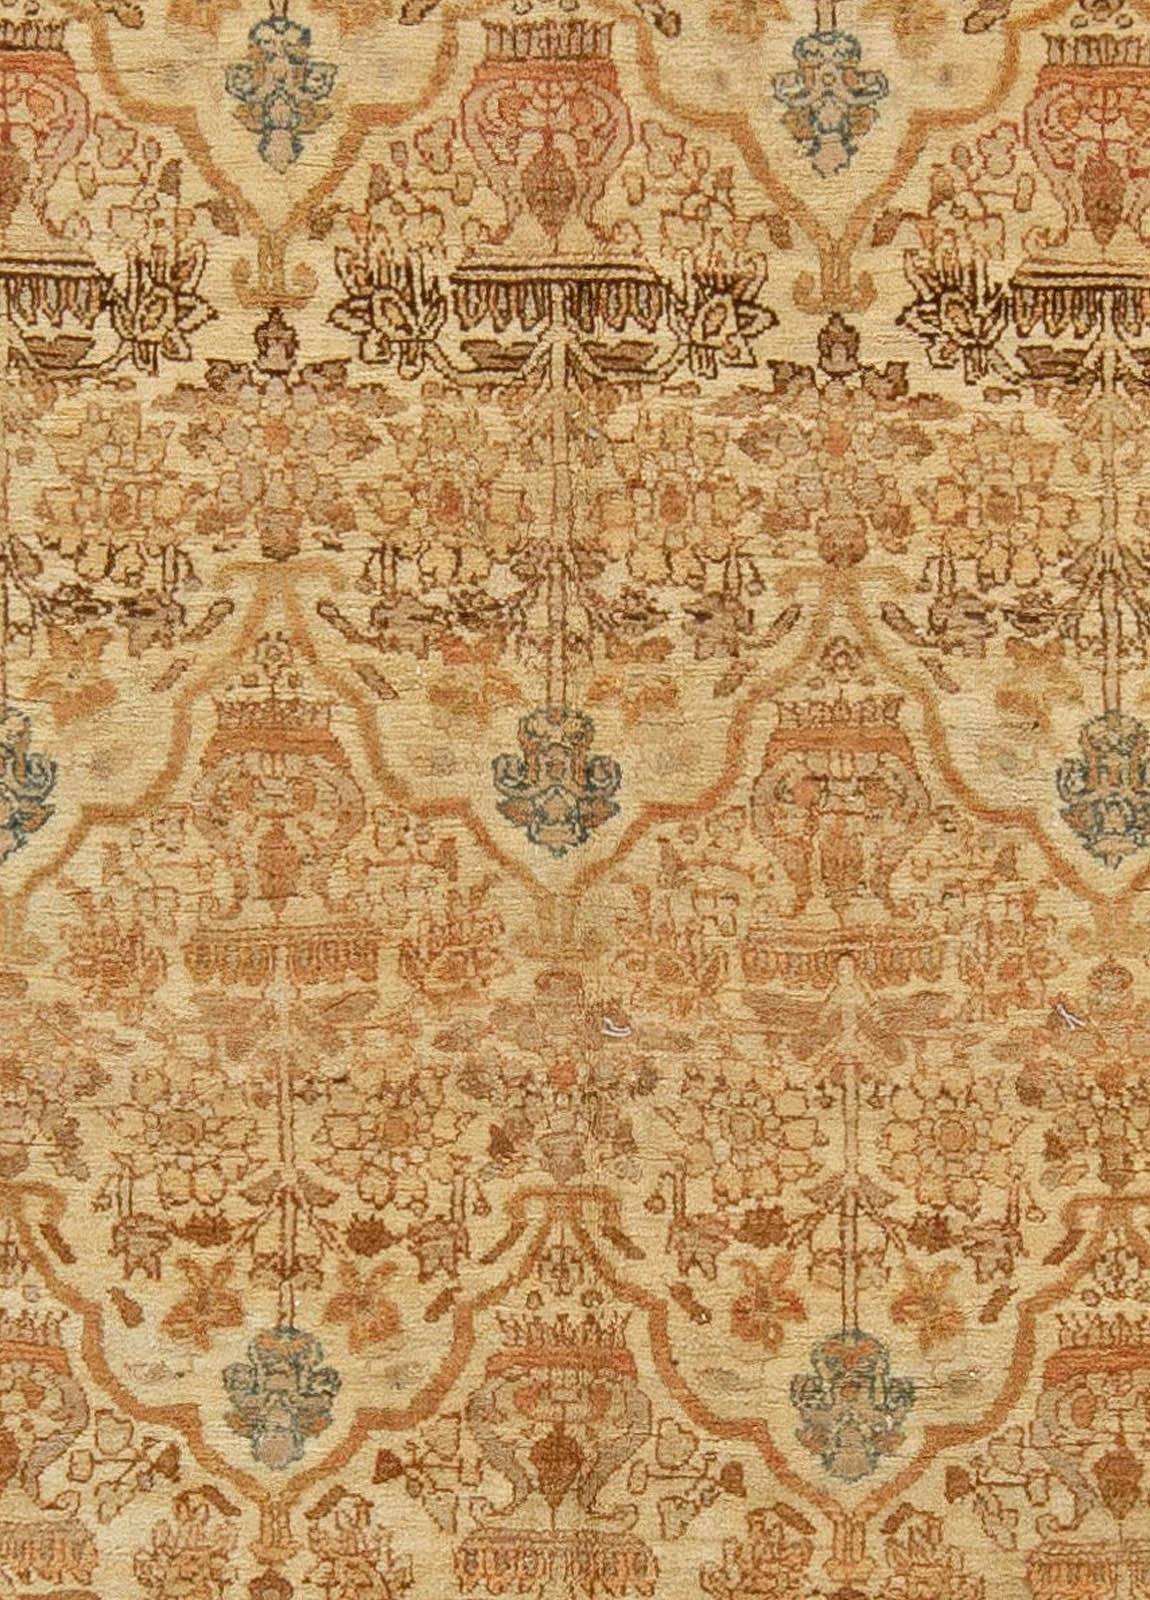 Vintage Persian Tabriz rug,
Size: 8'2